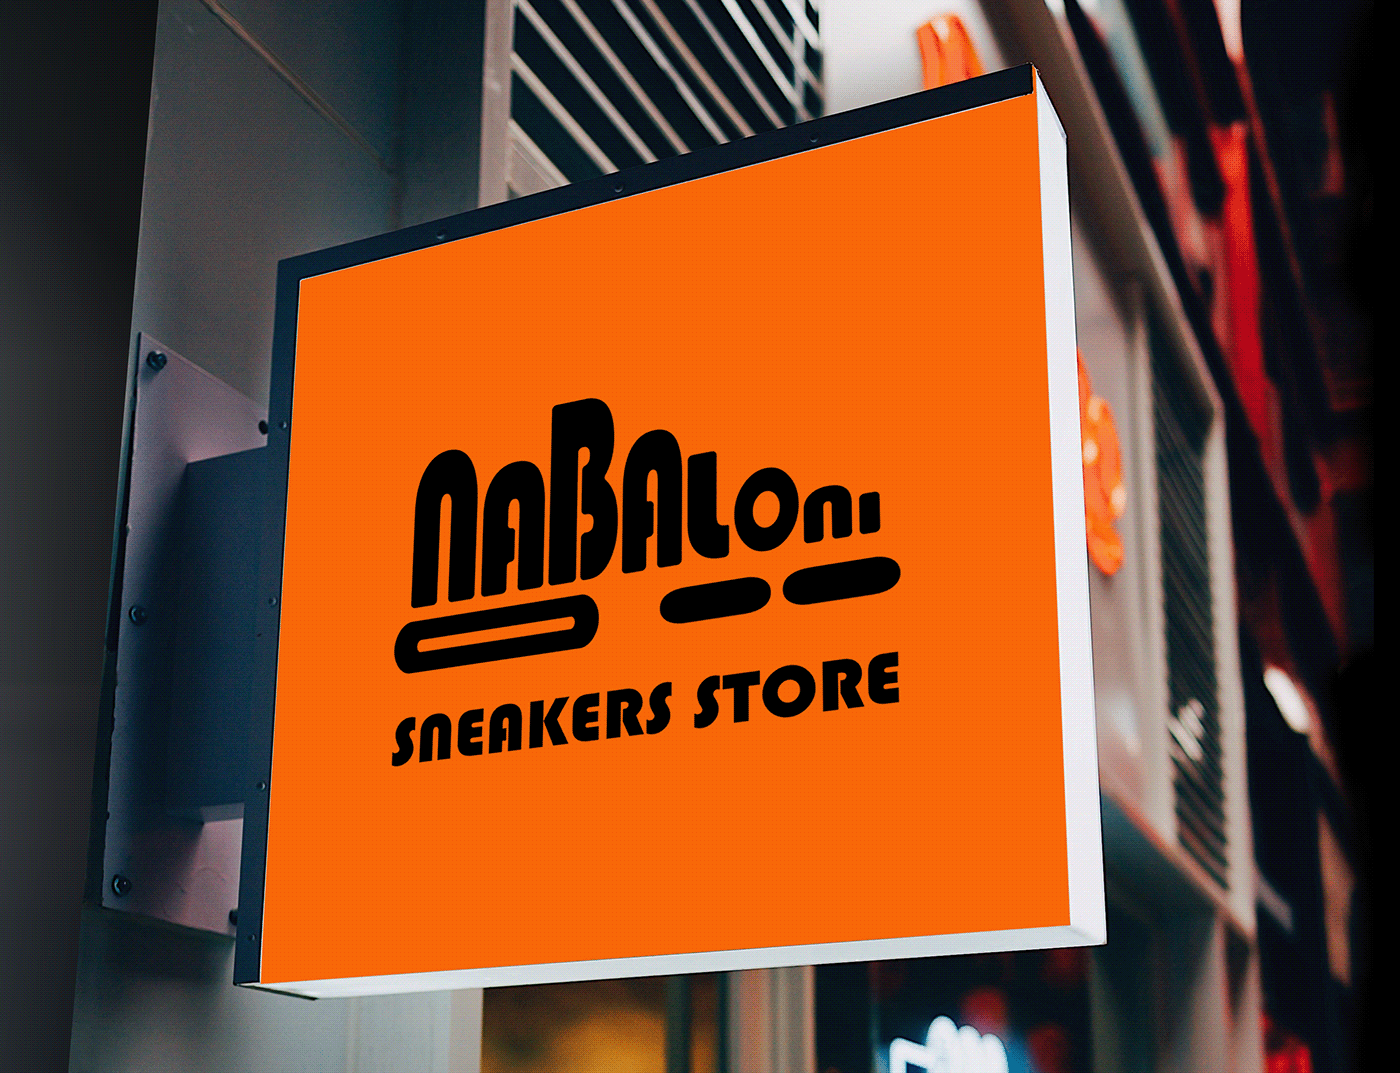 shoes store Nike airmax sneakers logo instagram store online store shop instagram shop